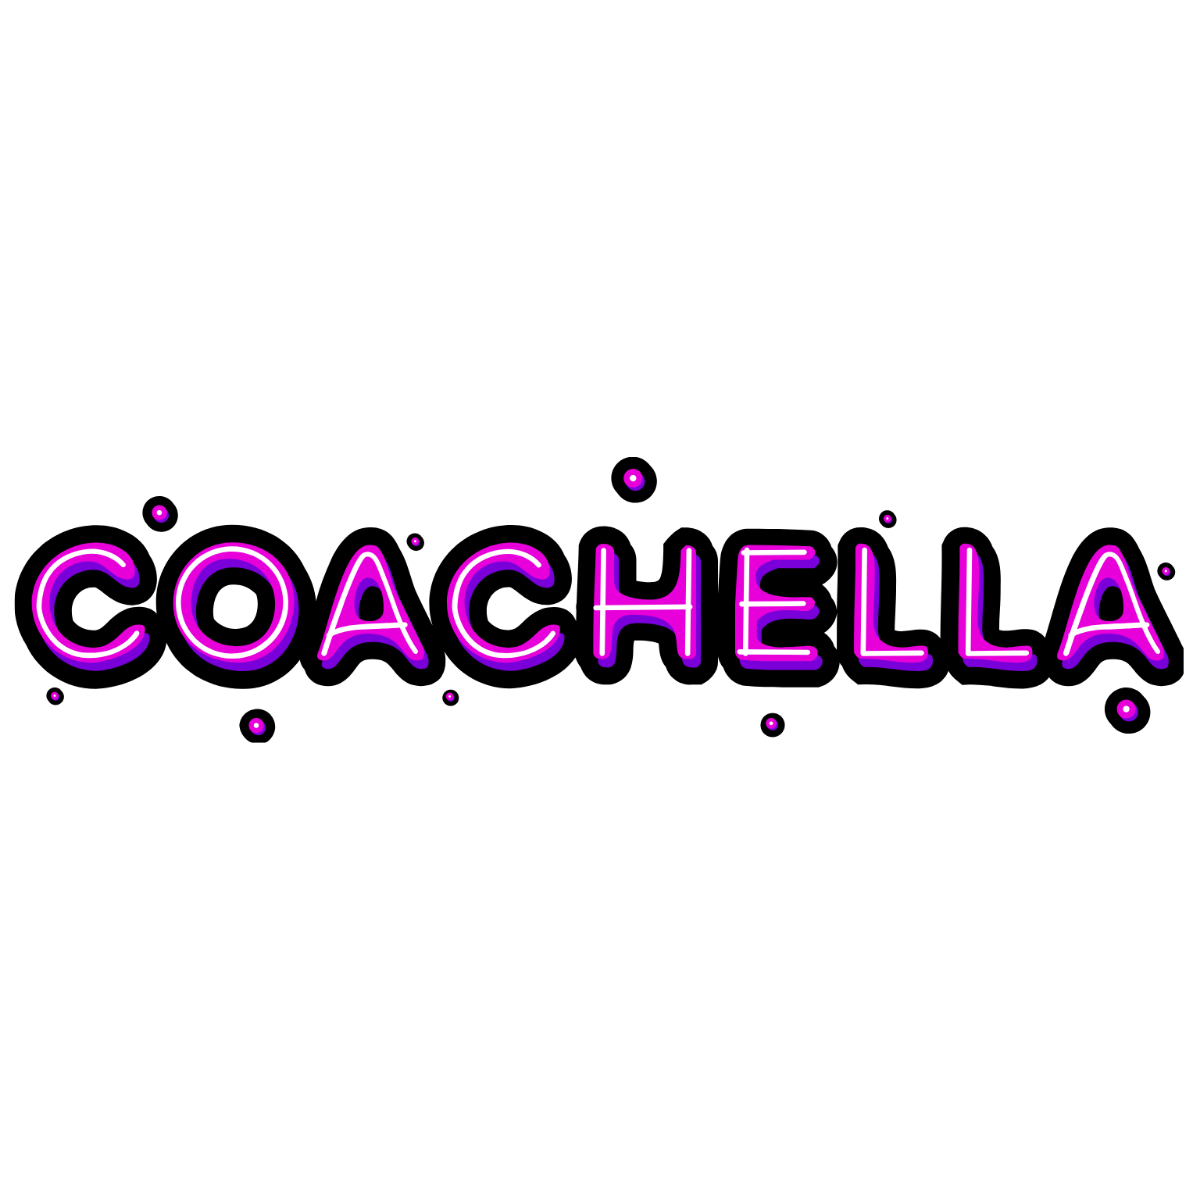 Coachella Text Effect Template